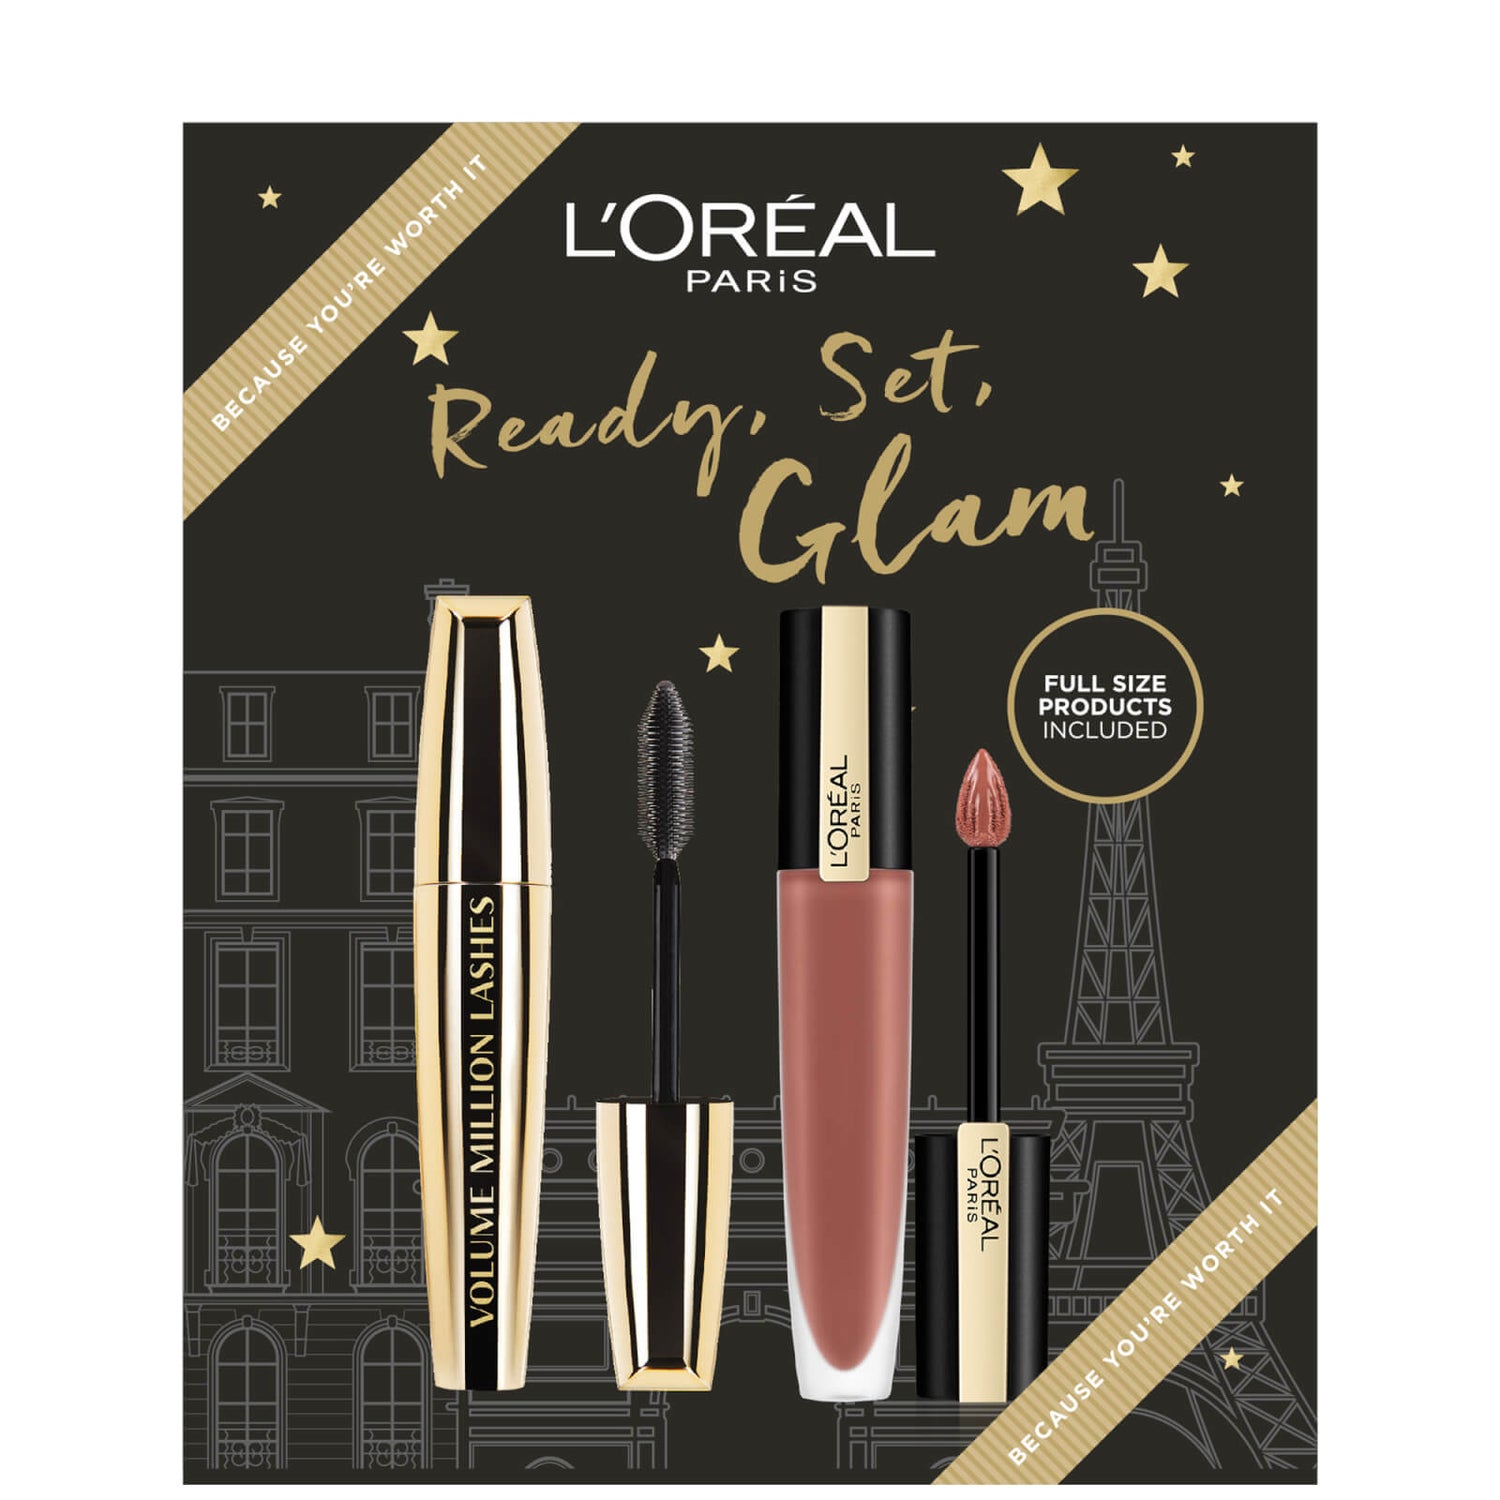 L'Oréal Paris Ready, Set, Glam Mascara and Lipstick Duo Gift Set